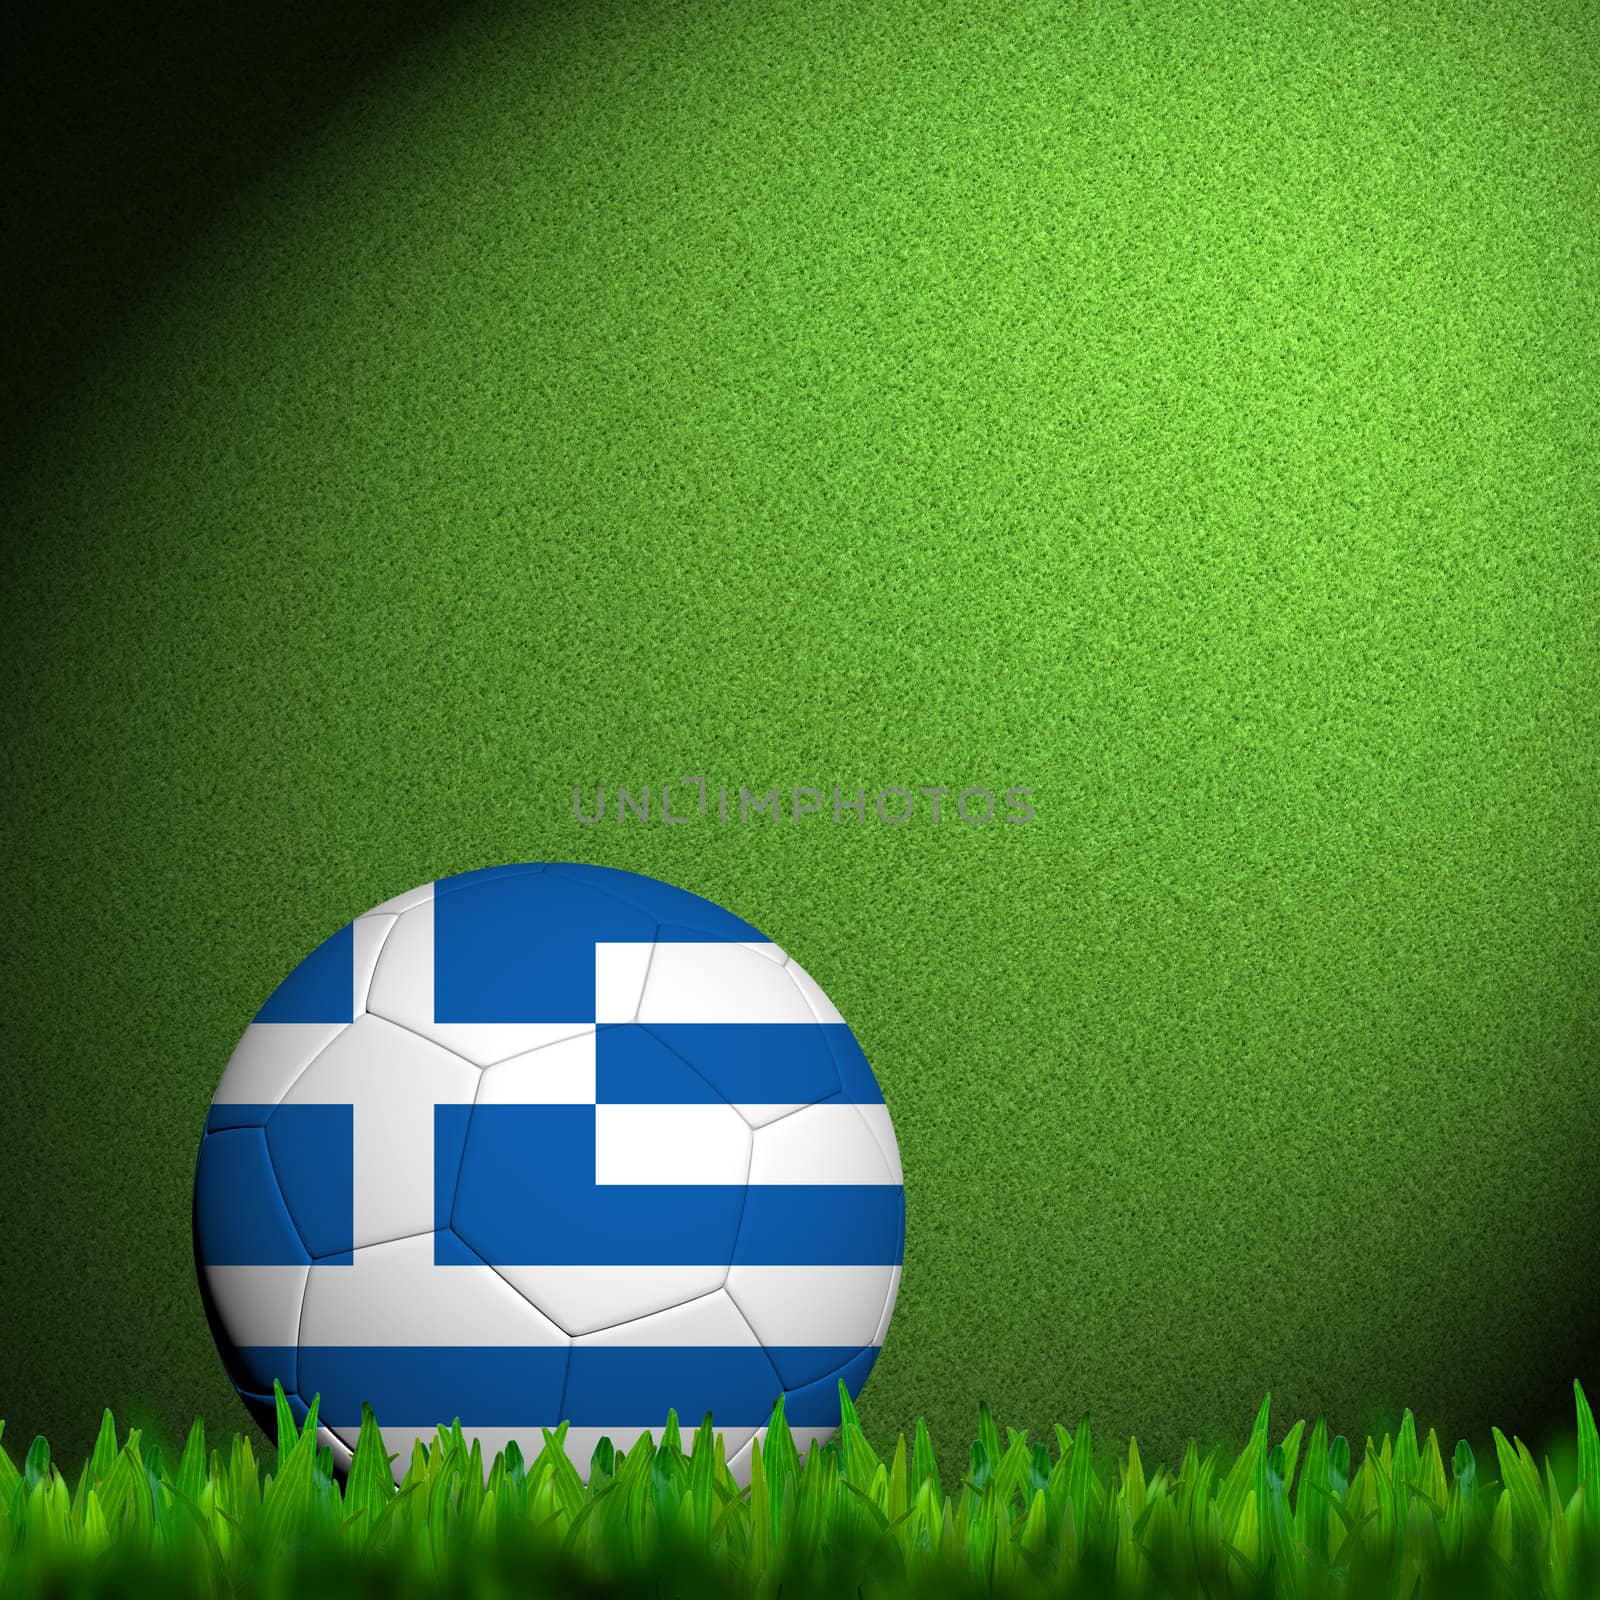 3D Football Greece Flag Patter in green grass by jakgree